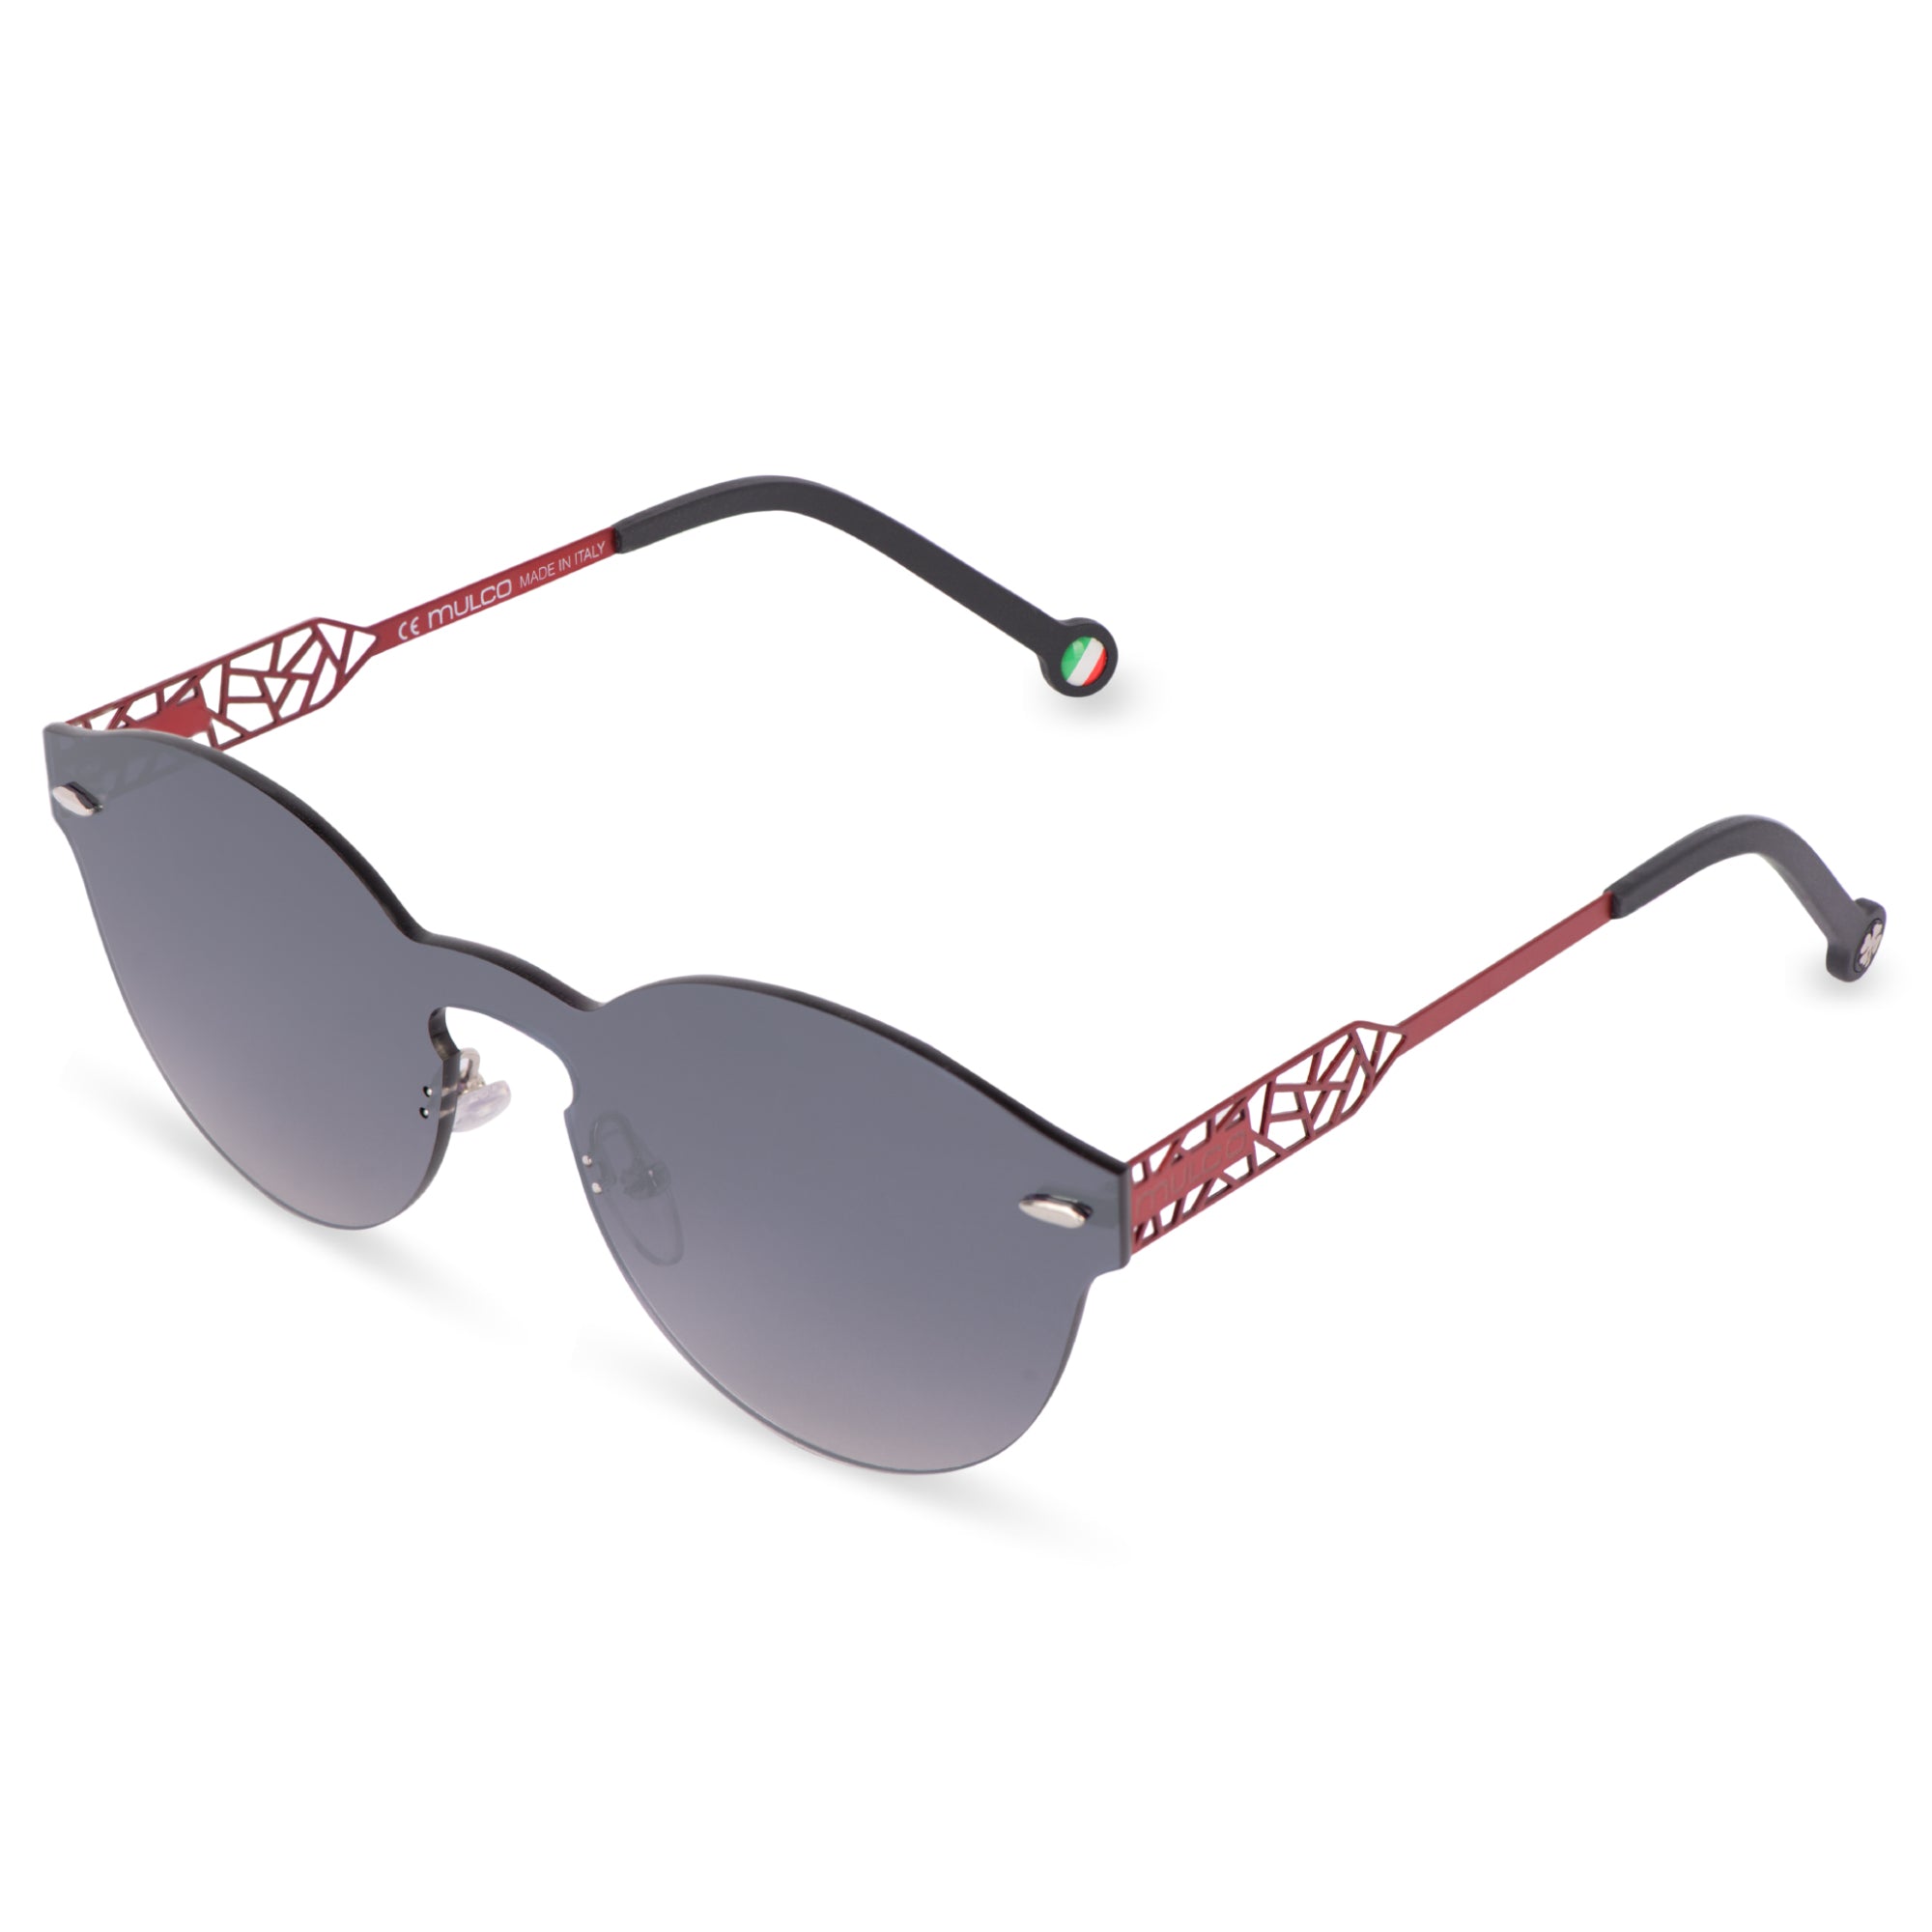 Sunglasses Round Watches Web Shape Stainless – Steel MK Mulco